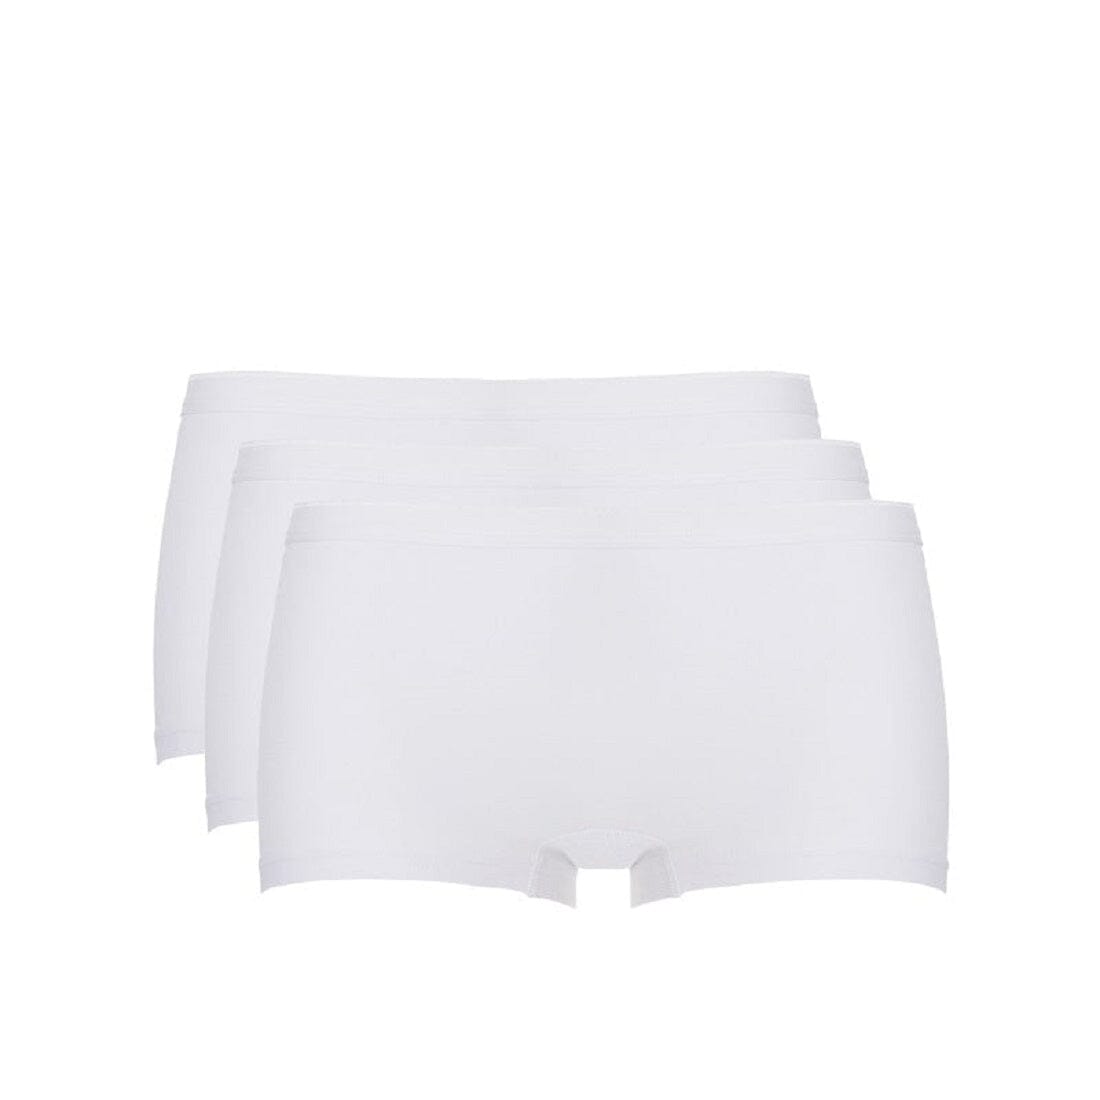 Ten Cate - 30190 - Basic Shorts 3-pack - White Short Ten Cate 